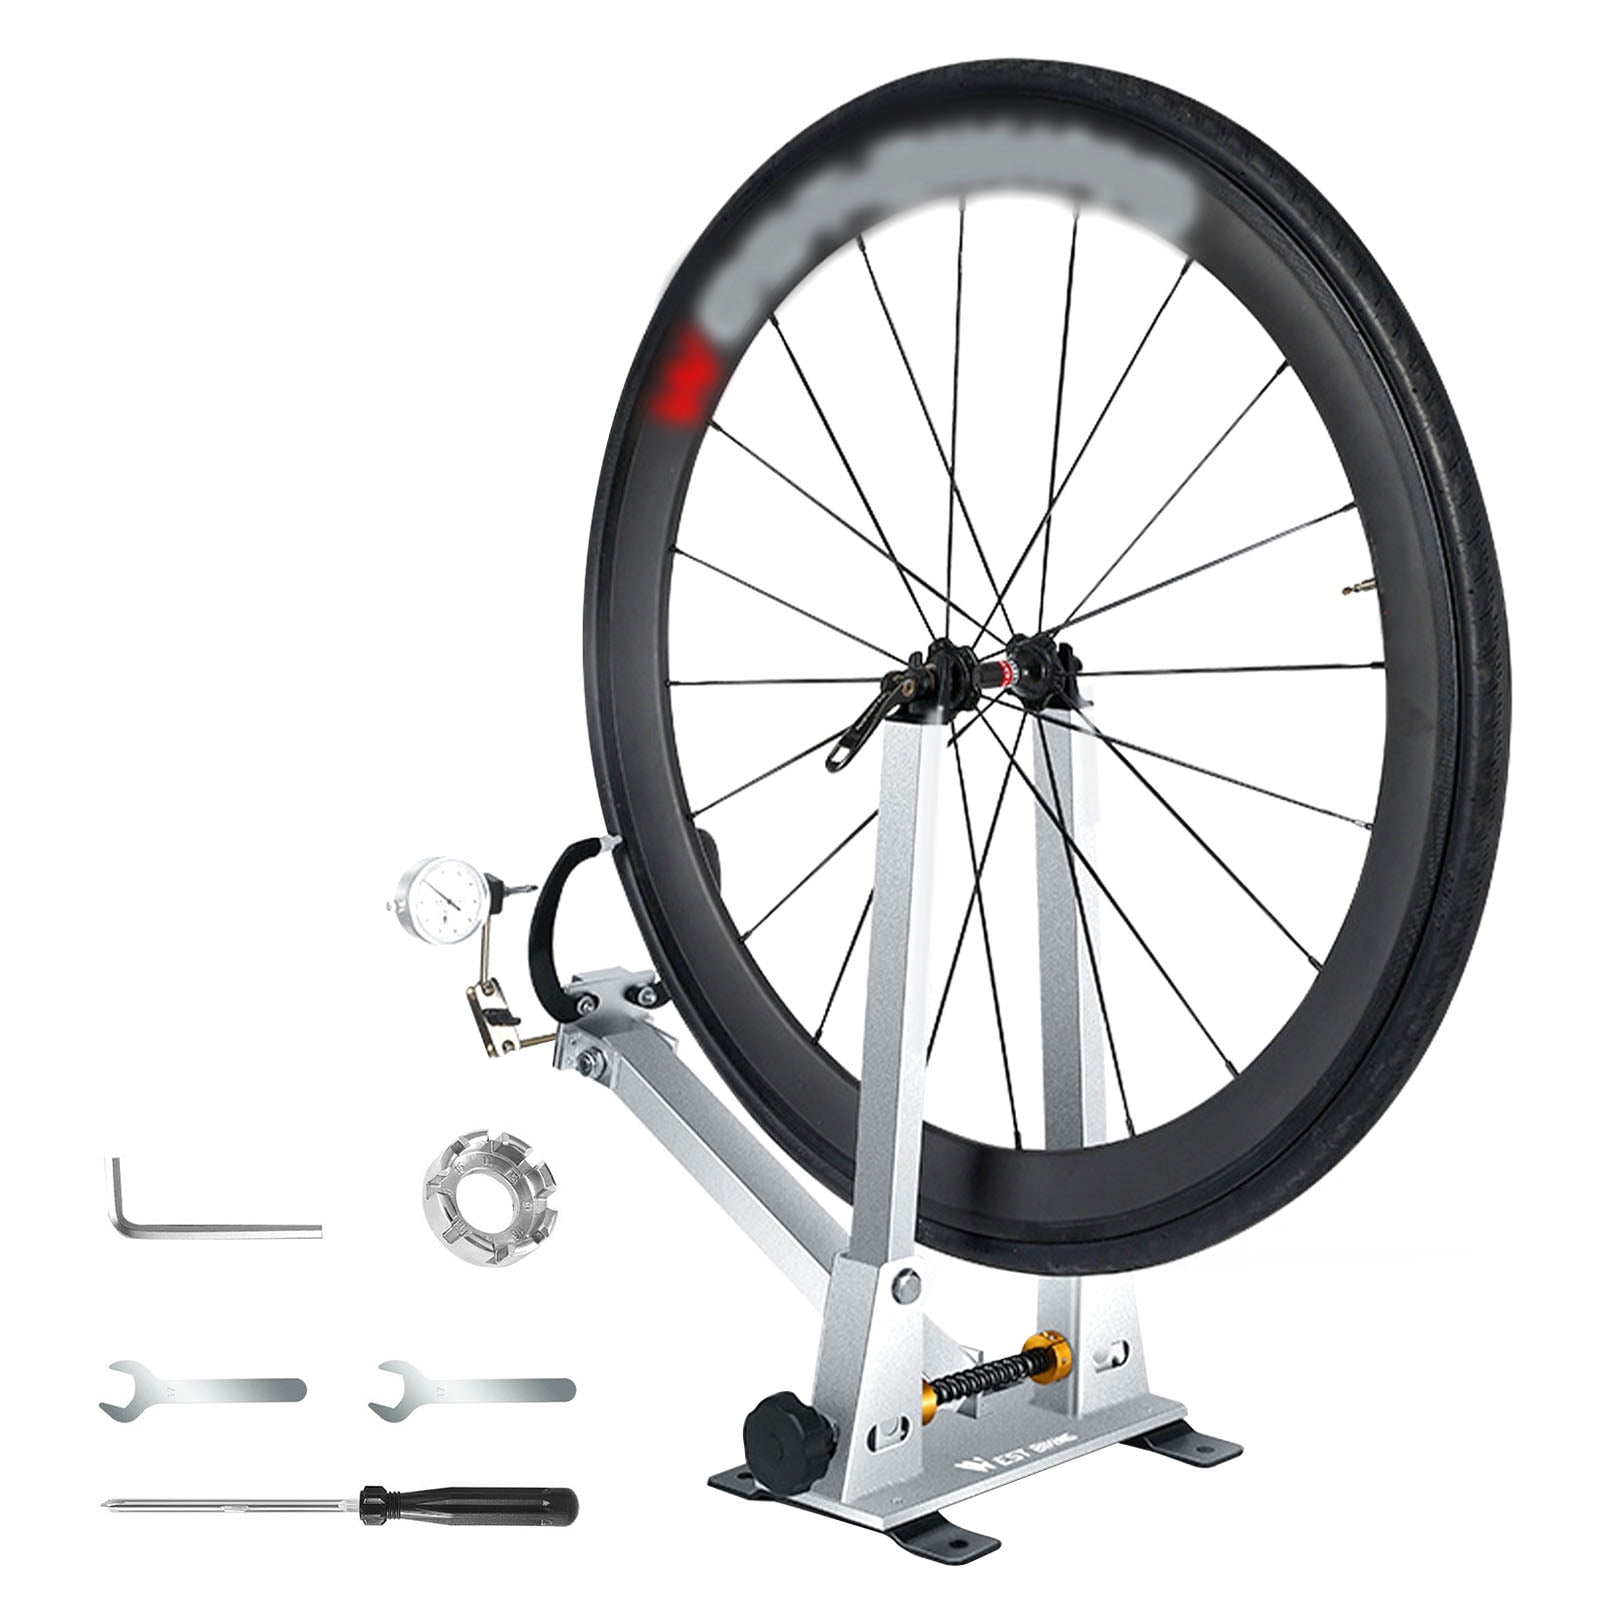 Bike Cycle Wheel Truing Stand Bicycle Wheel Repair Maintenance Home Truing Stand 